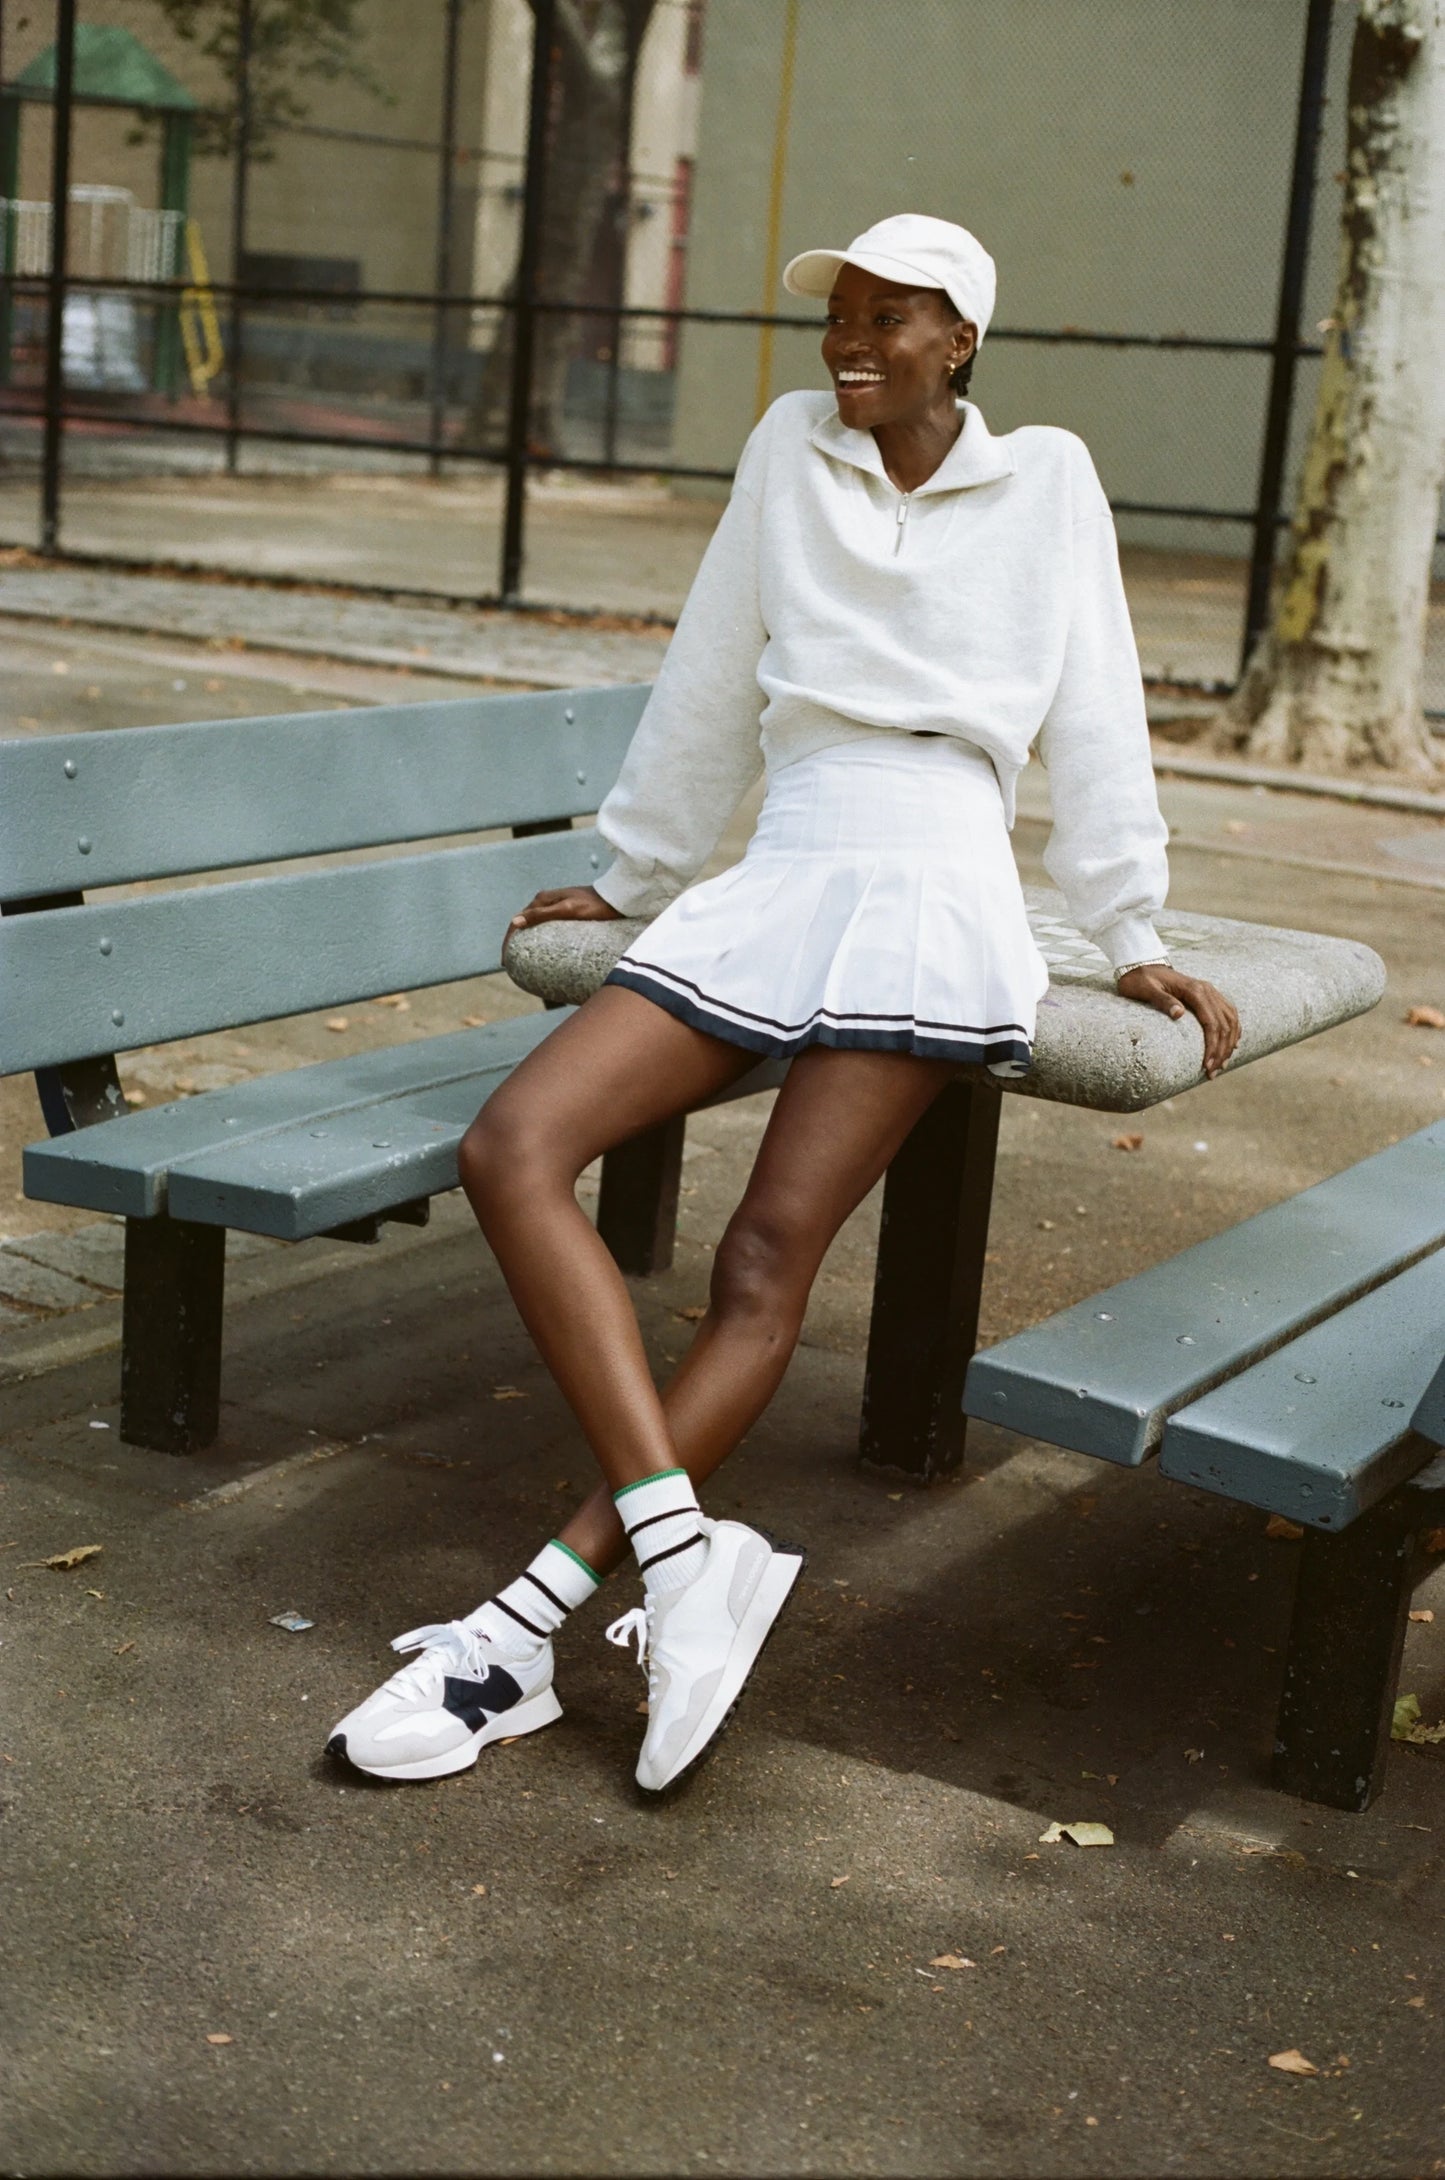 Tennis Skirt - White with Navy Trim